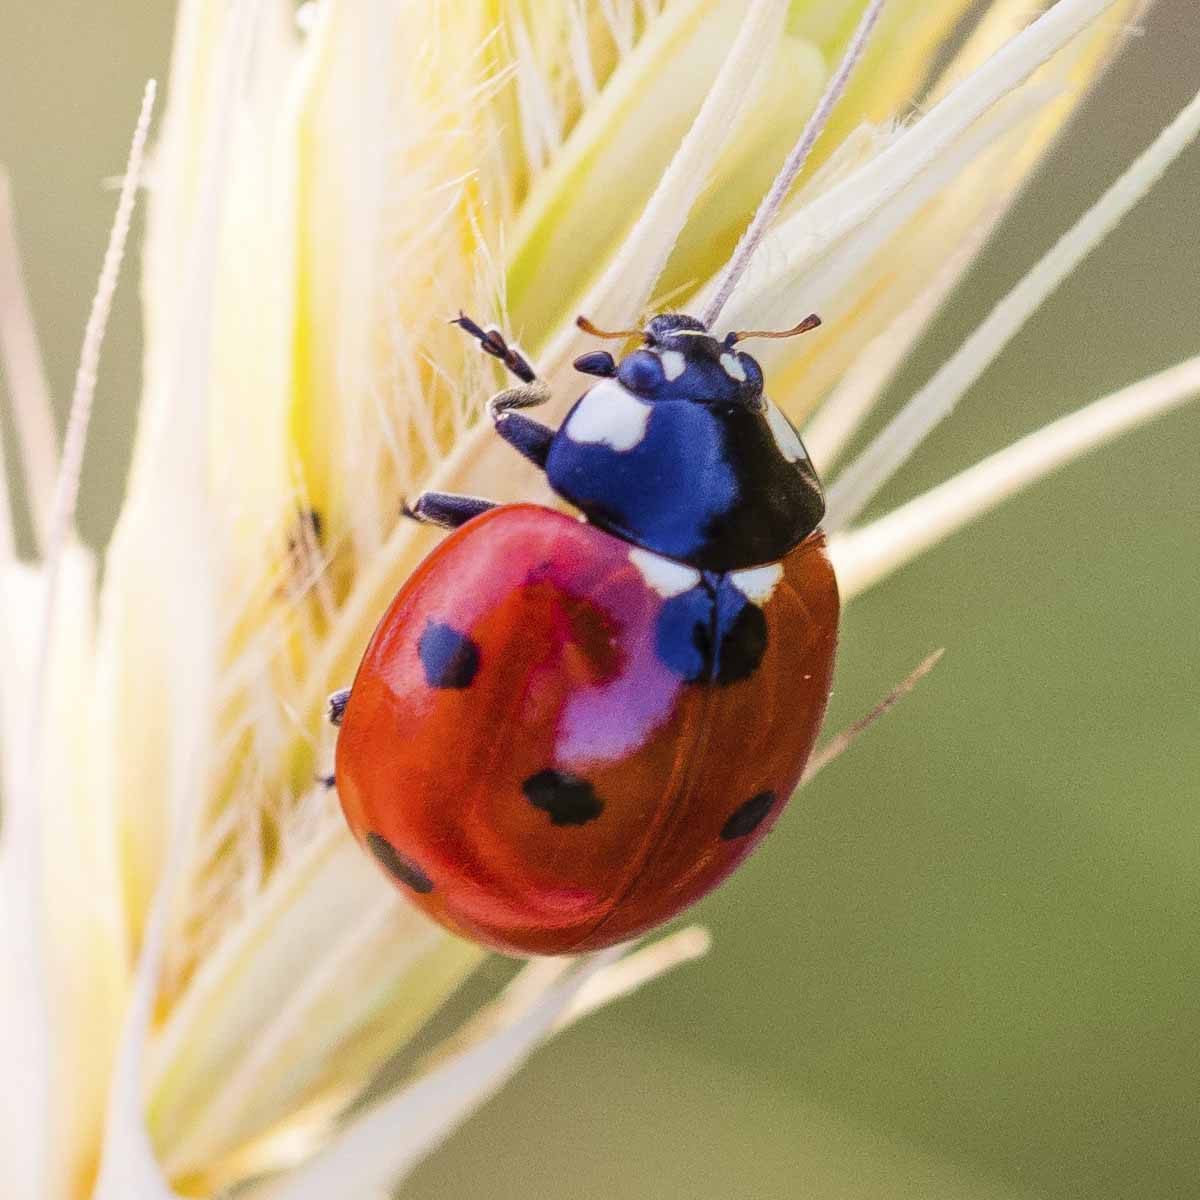 A ladybug on plant stock